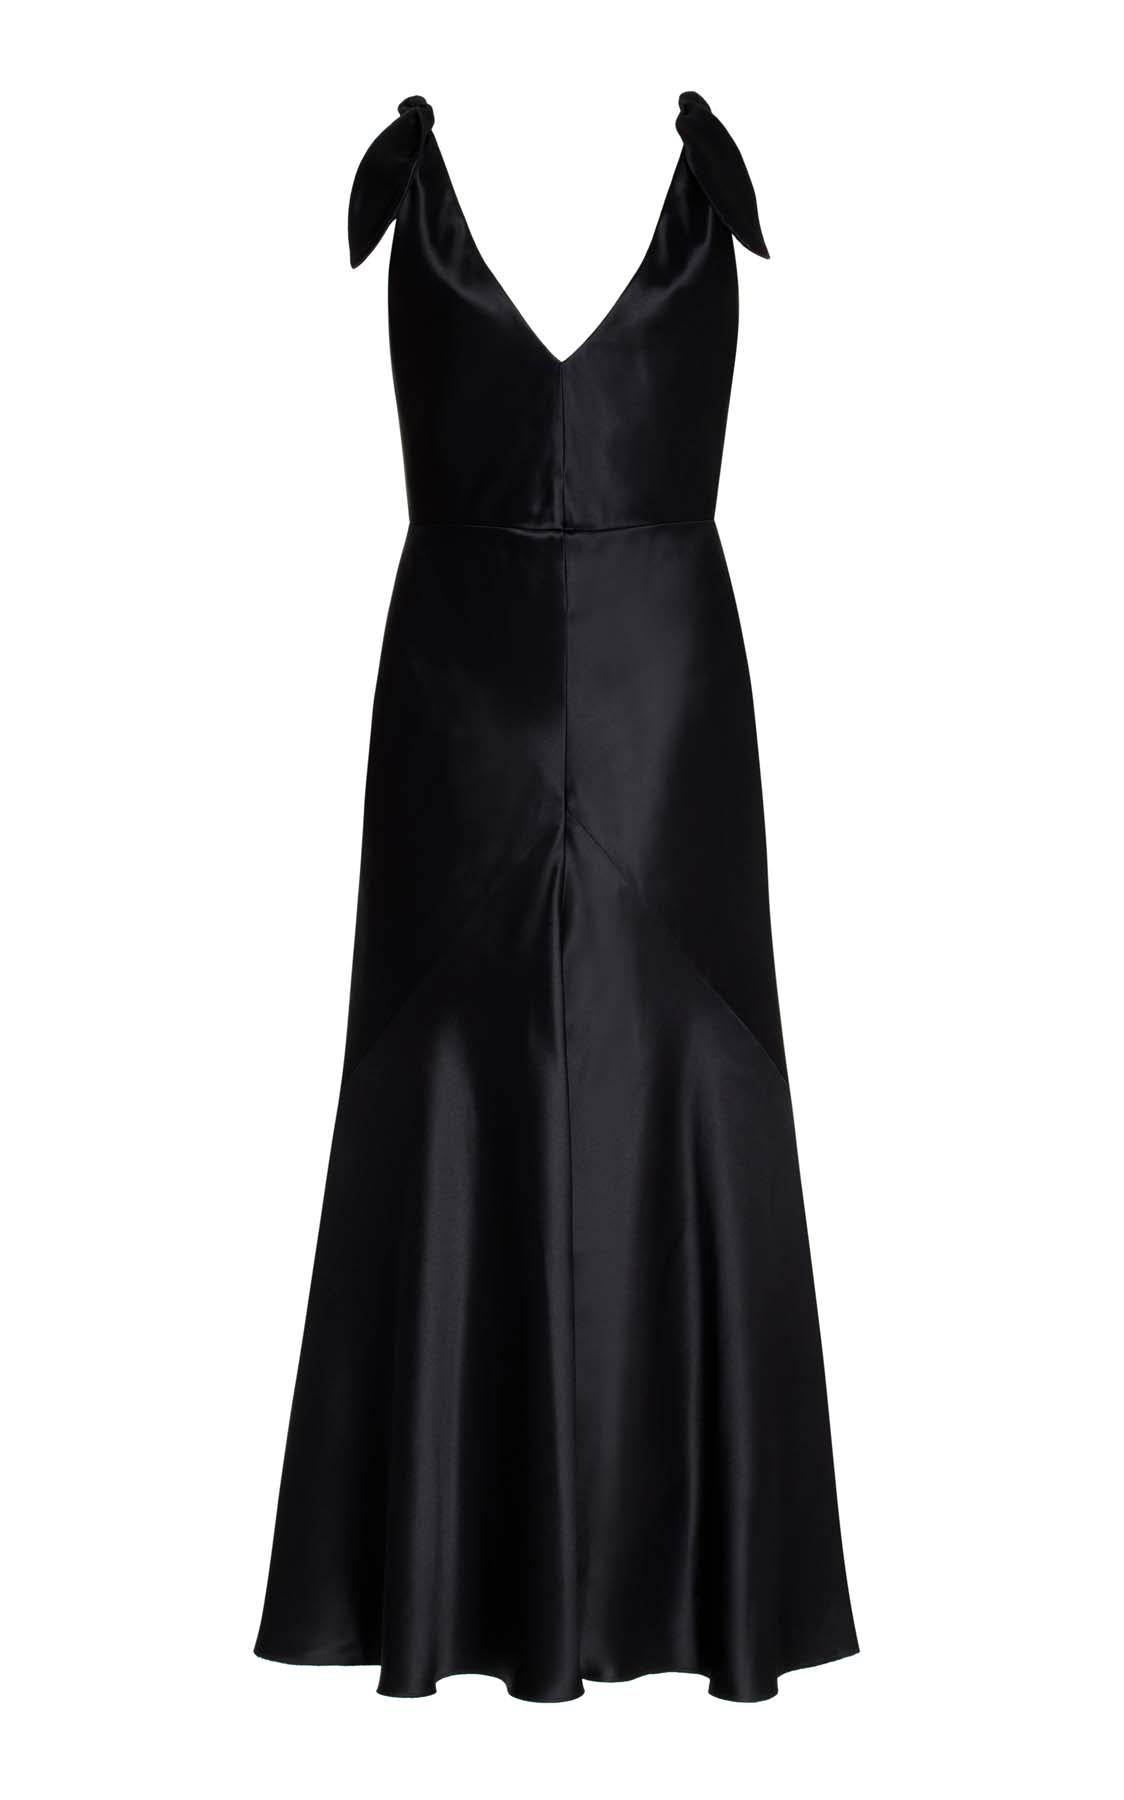 Havilland Dress in Black Silk